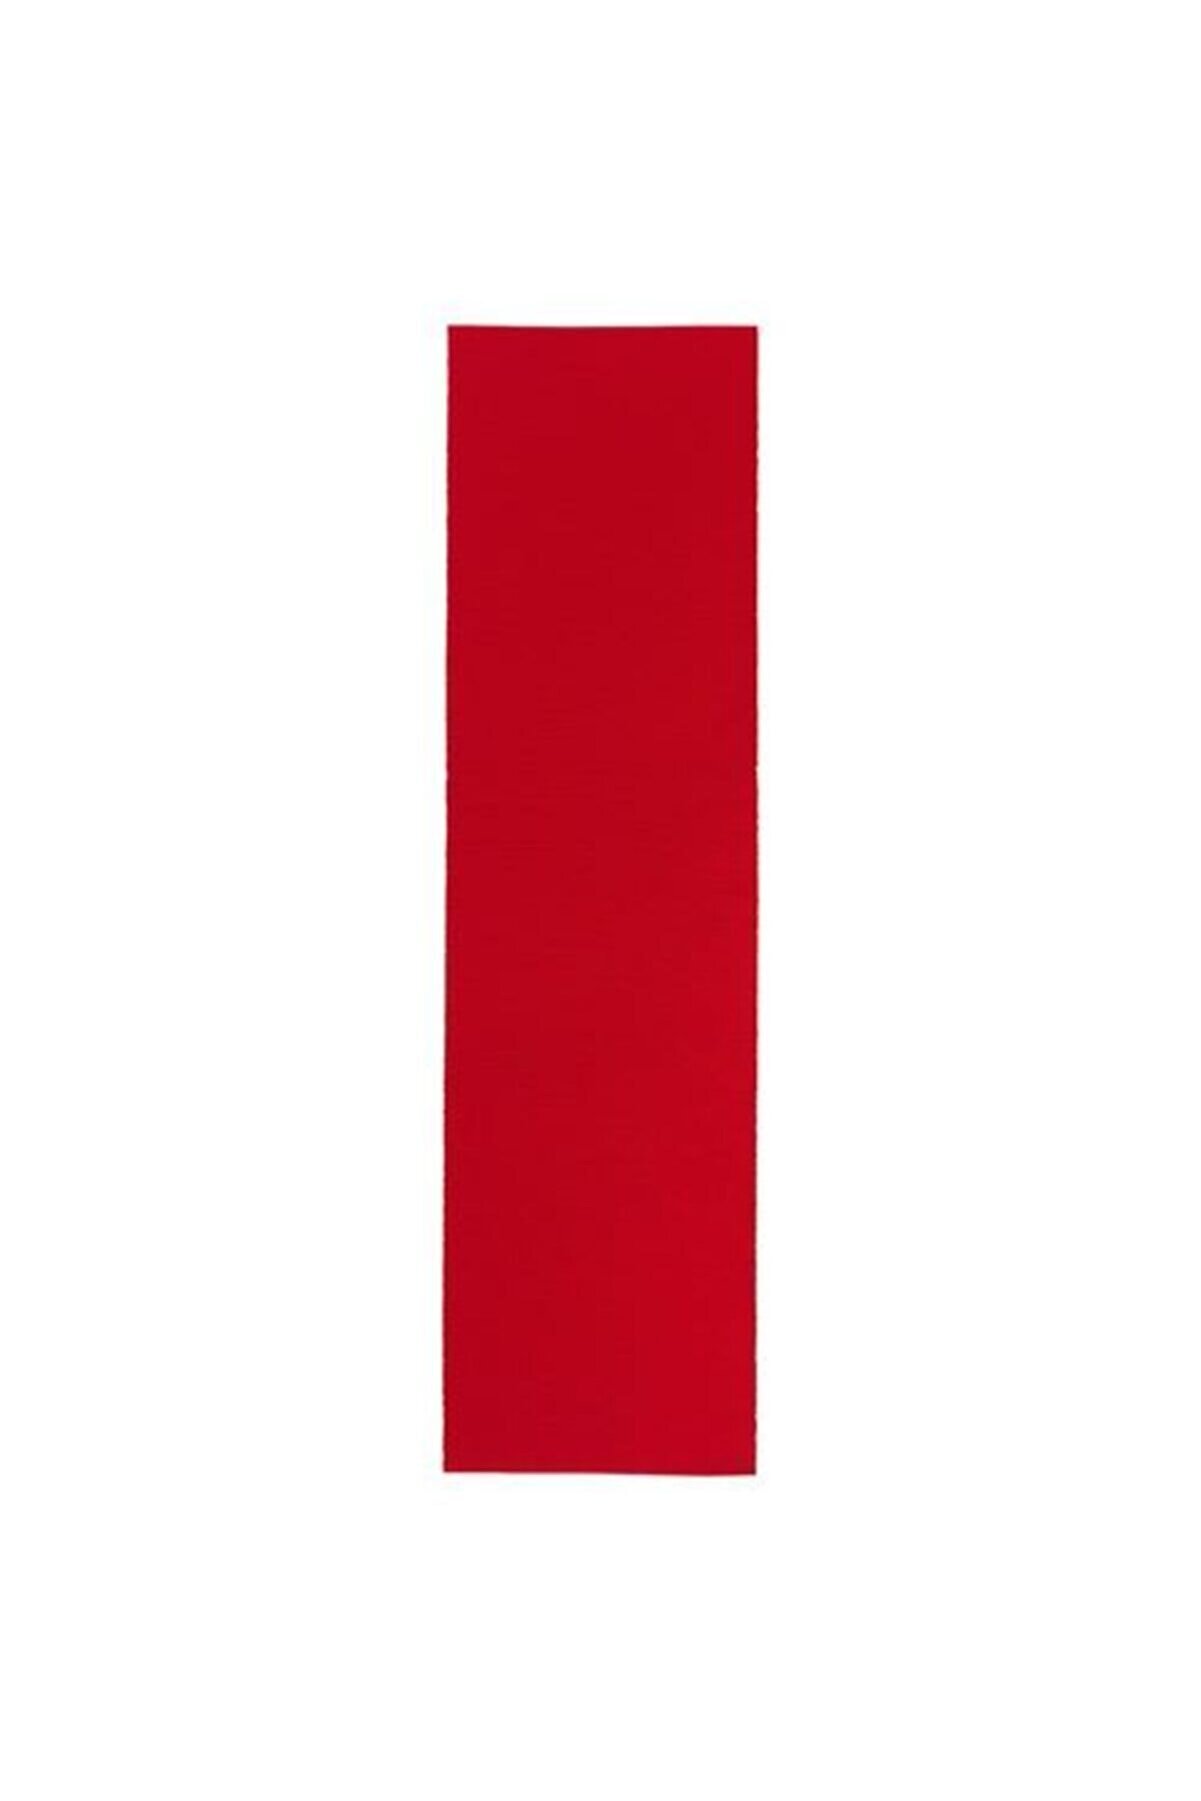 IKEA Vinter 2021 Kırmızı Servis Örtüsü Yılbaşı 130*35